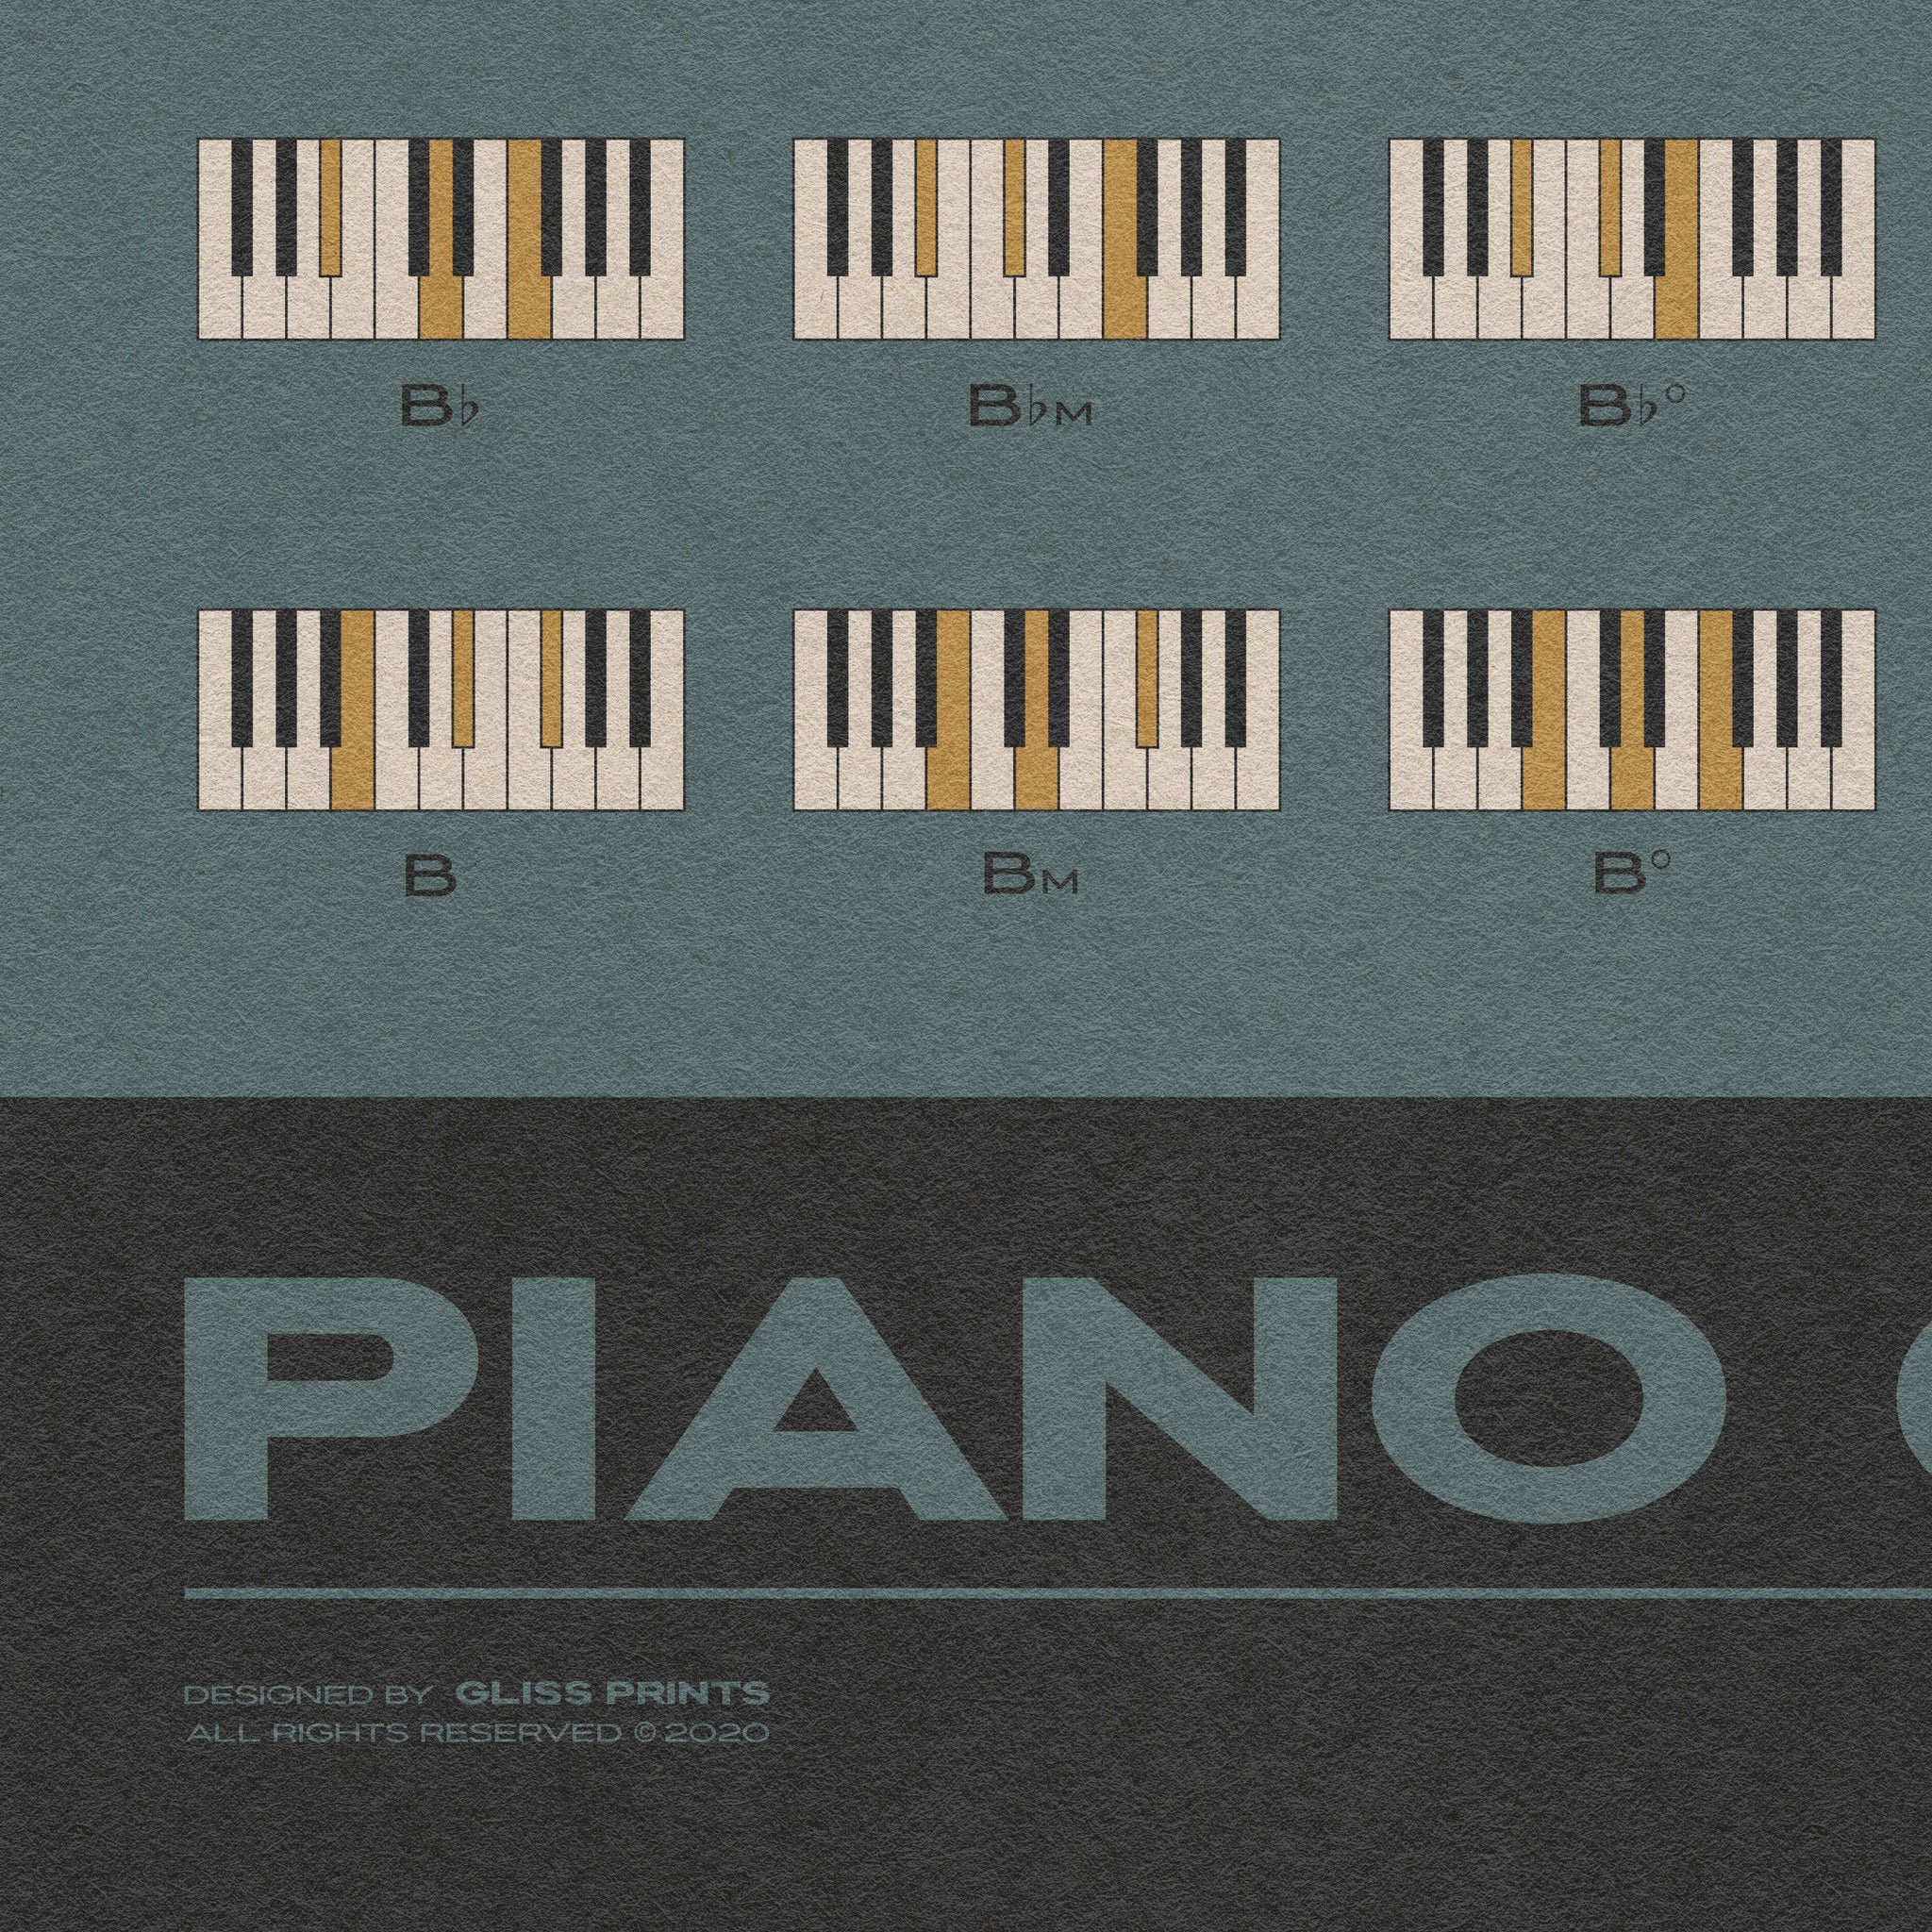 Piano Chords Chart, Blue